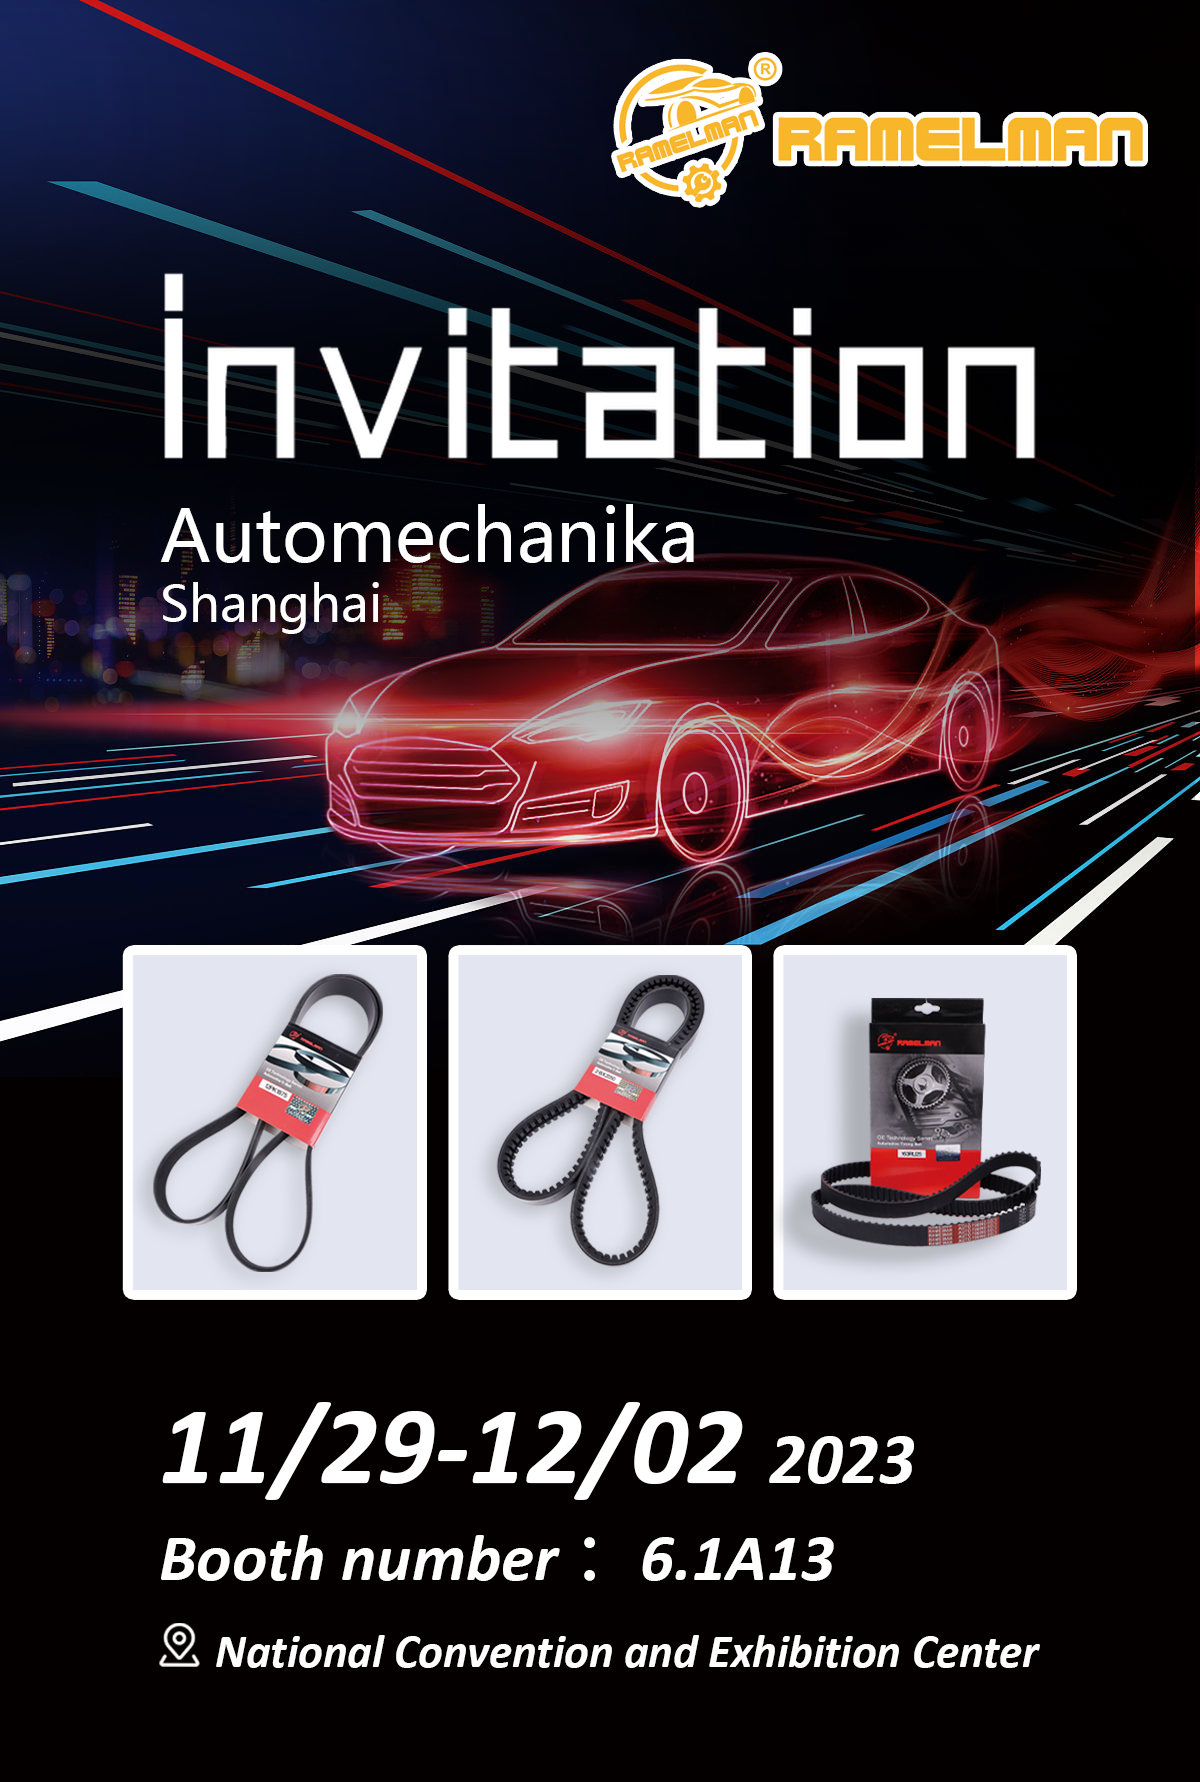 Automechanika Exhibition